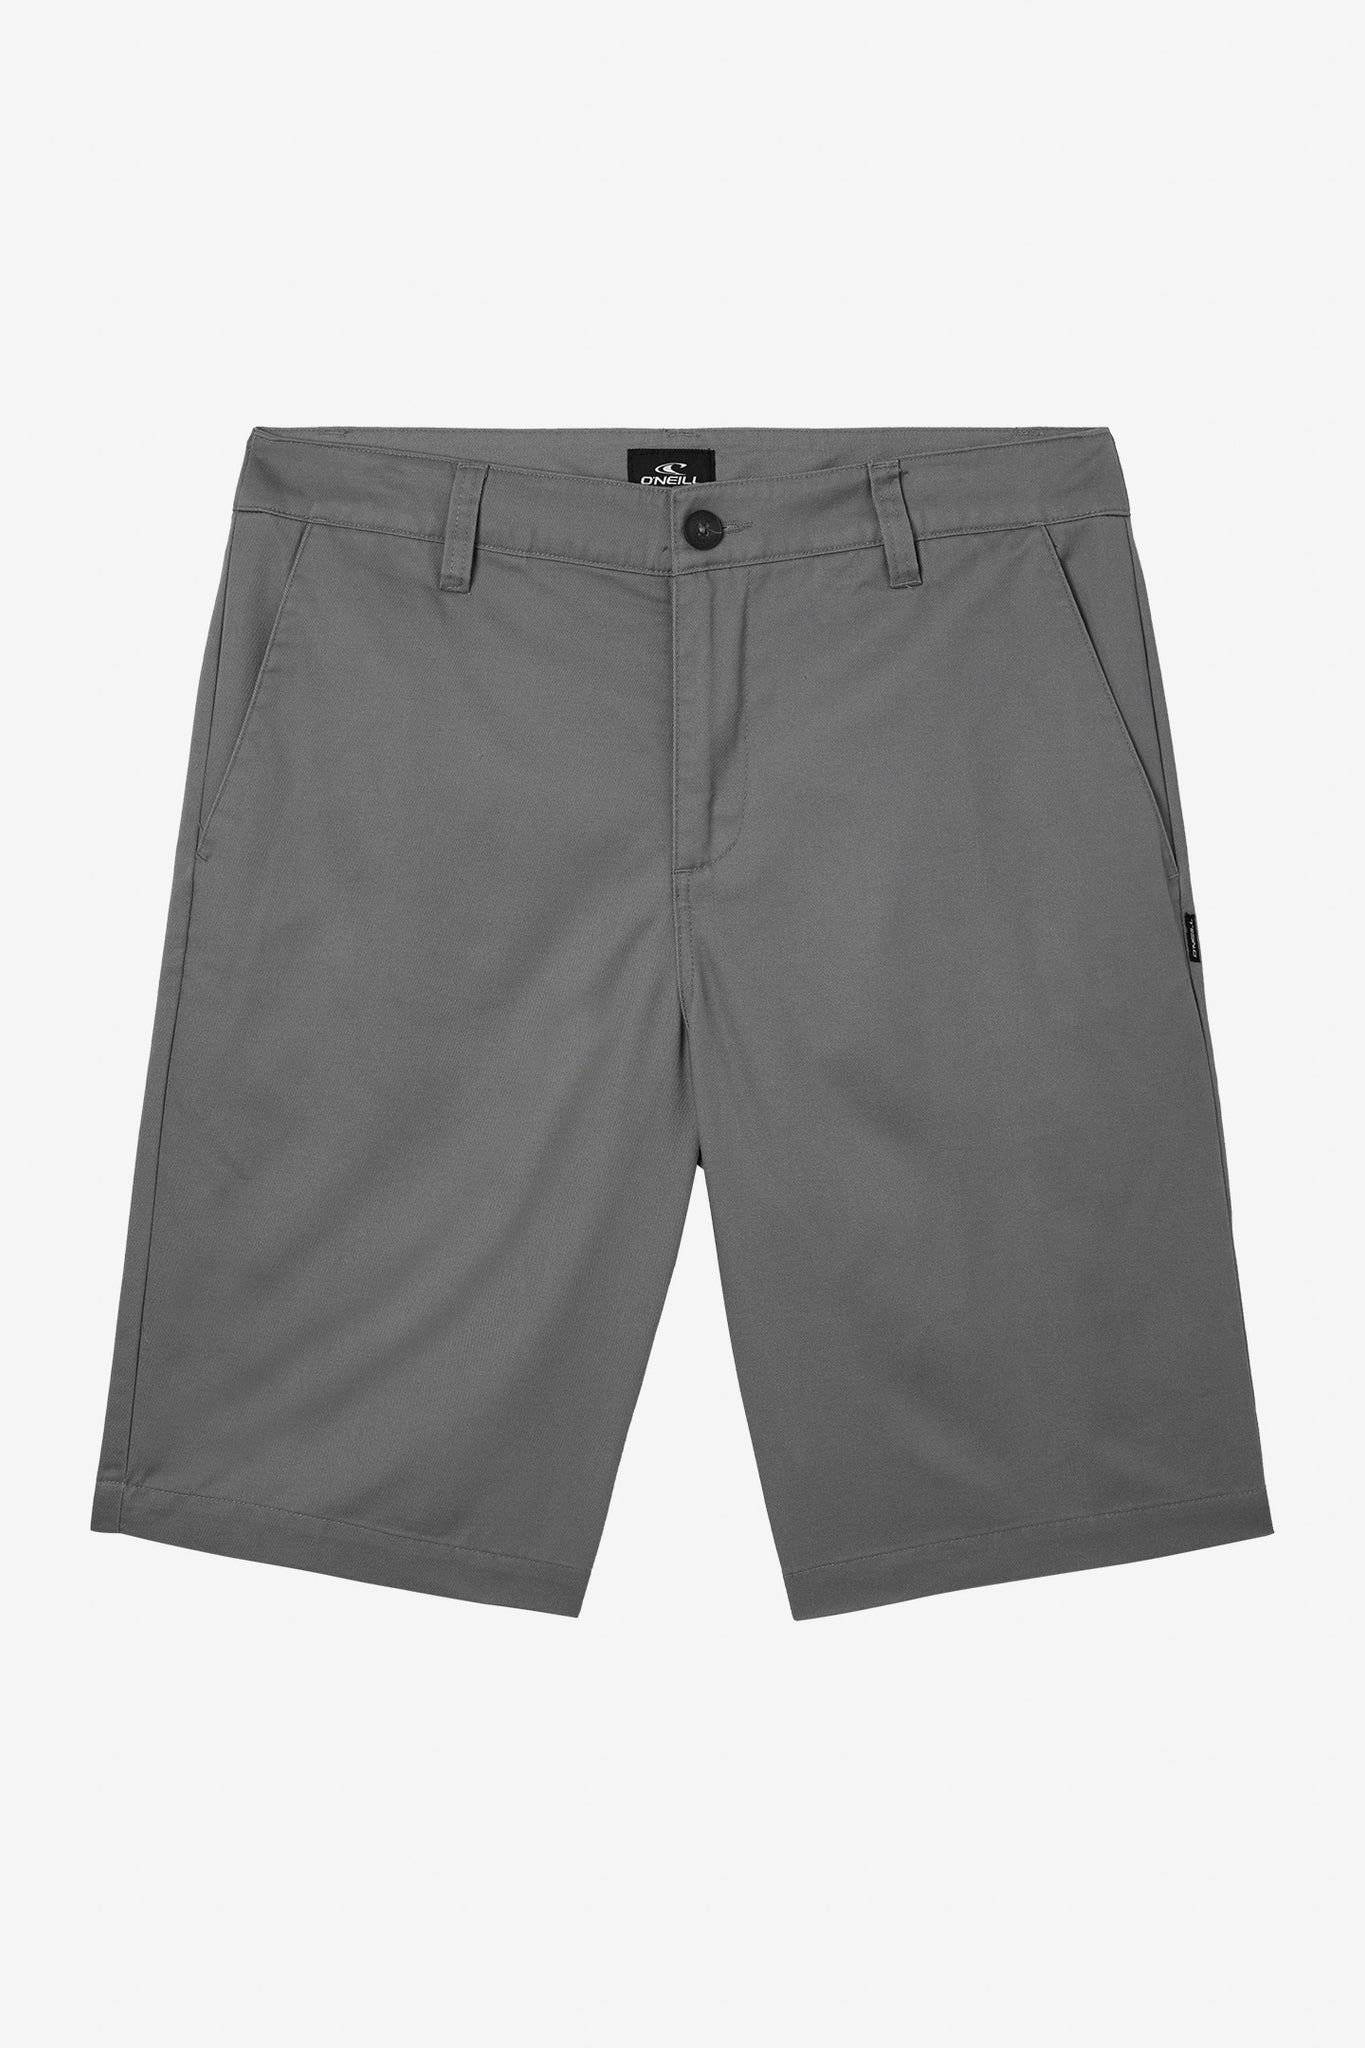 O'NEILL Men's 22 Stretch Chino Shorts - Comfortable Mens Shorts with  Pockets, Navy